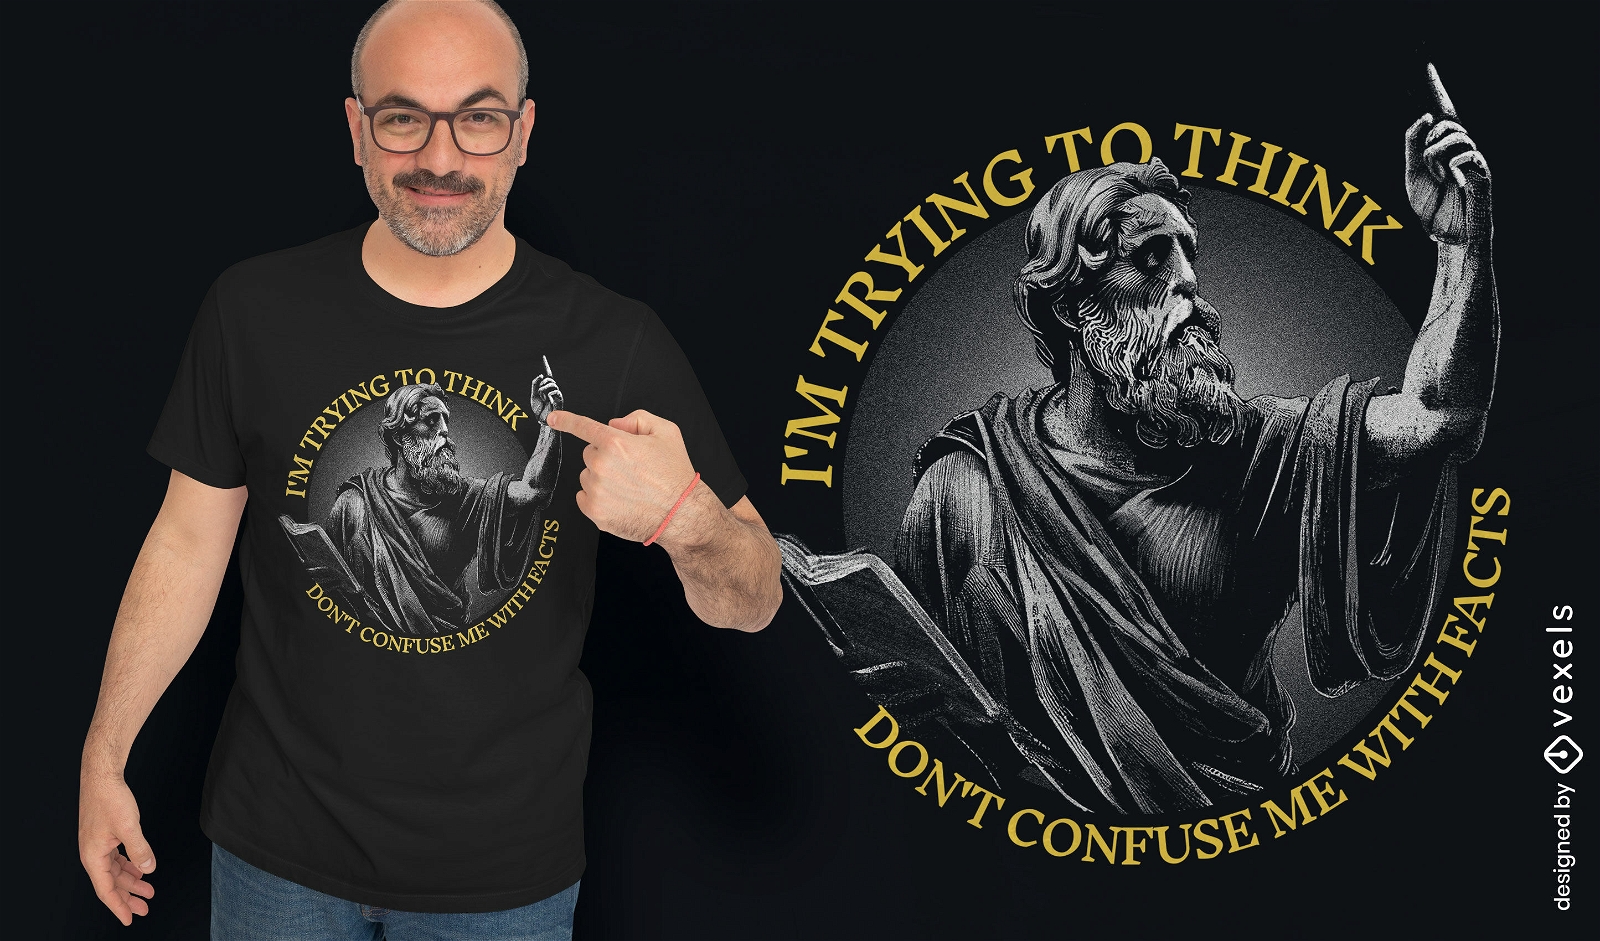 Philosophical quote t-shirt design